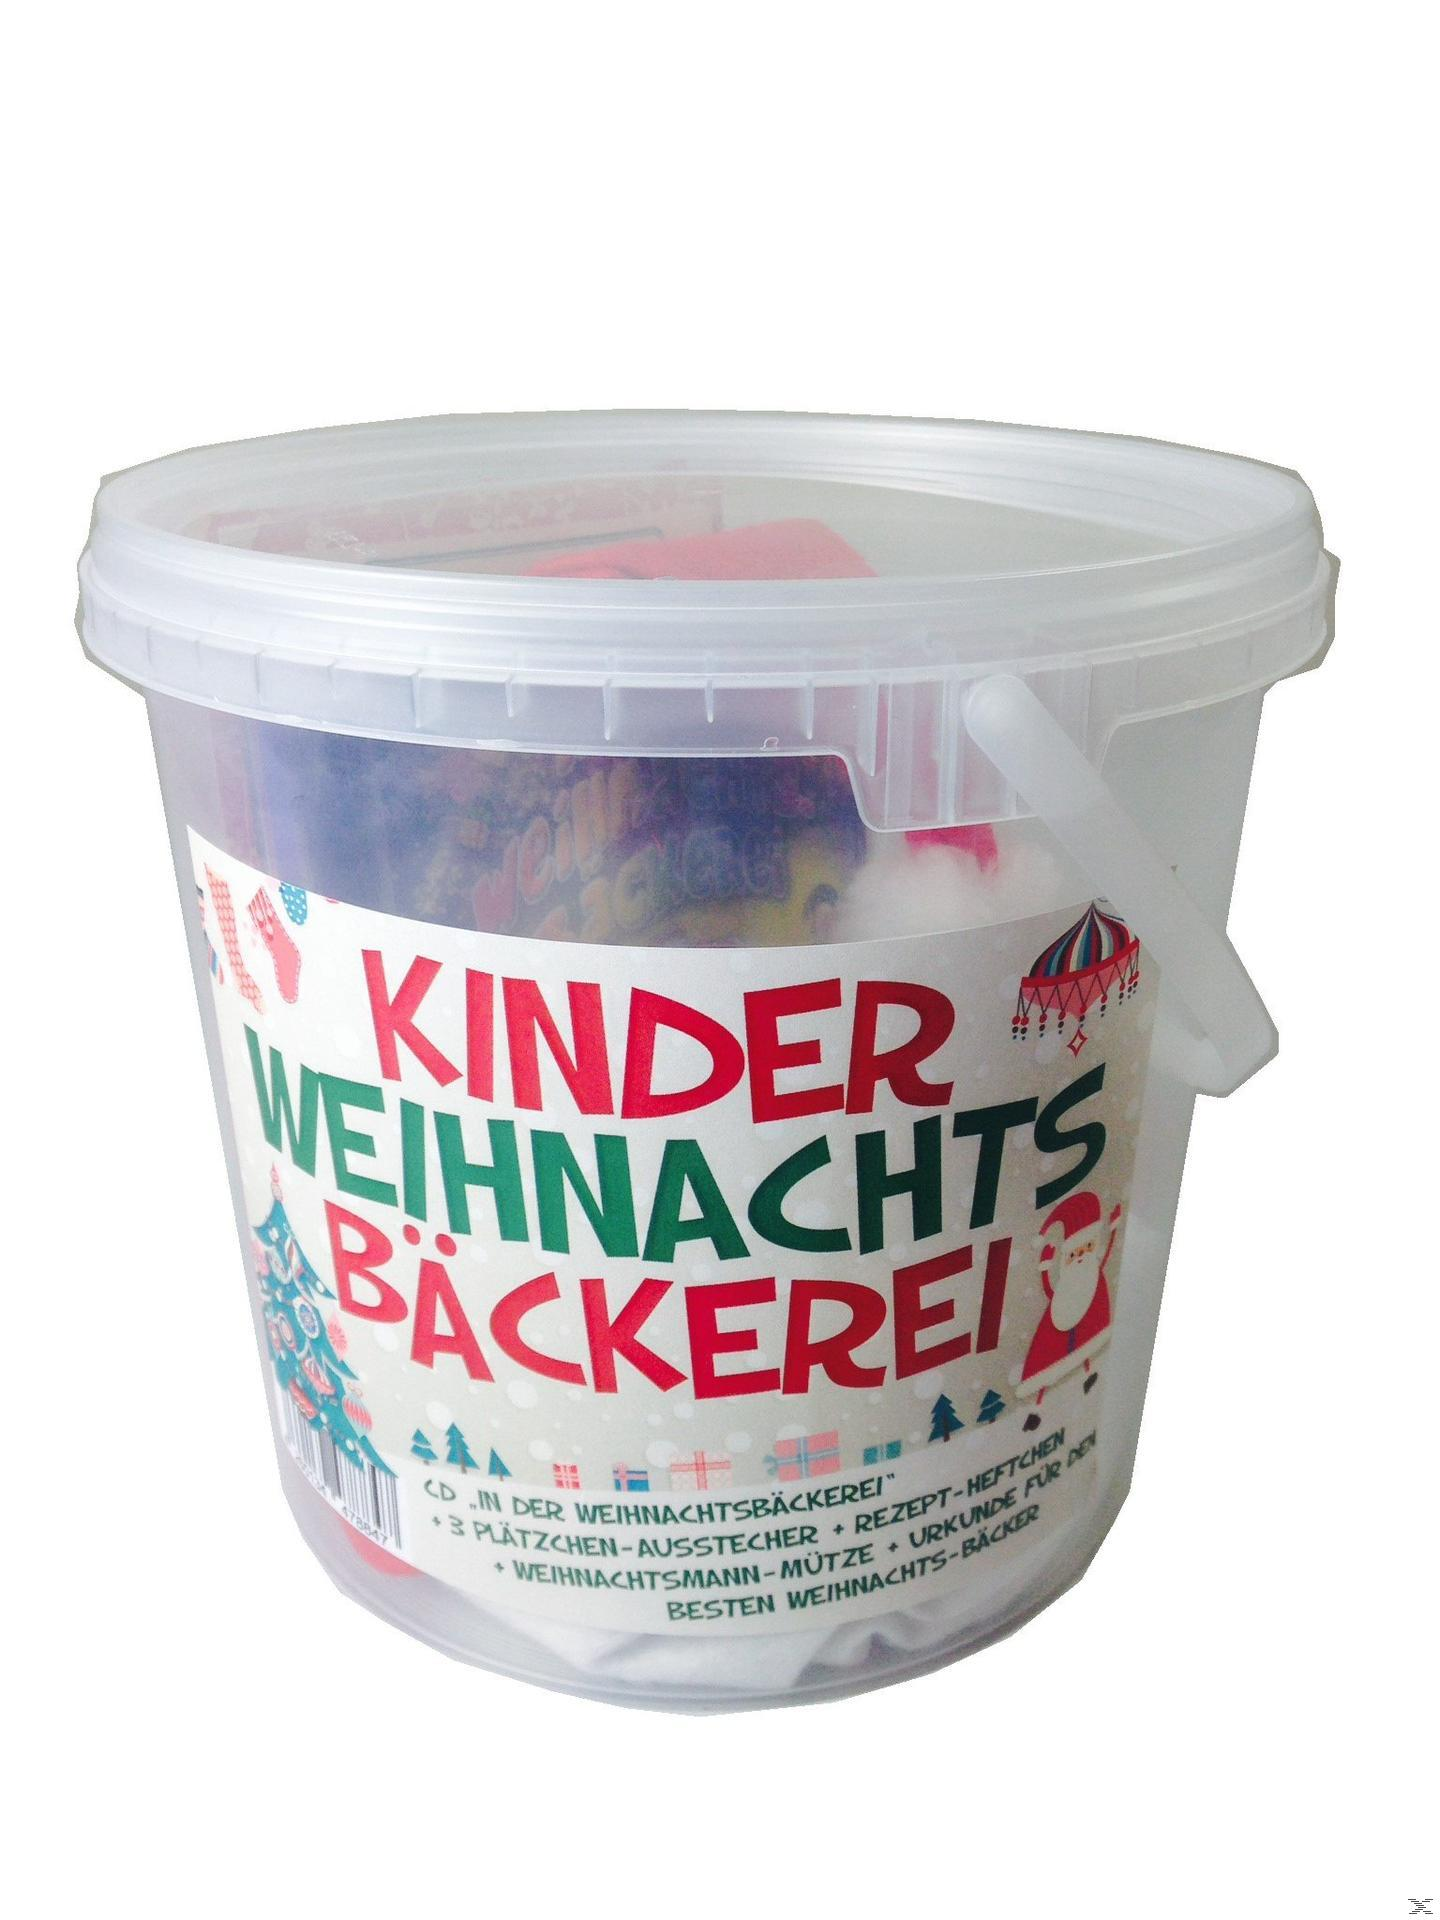 VARIOUS - + Kinder Merchandising) (CD Eimer Weihnachtsbäckerei 